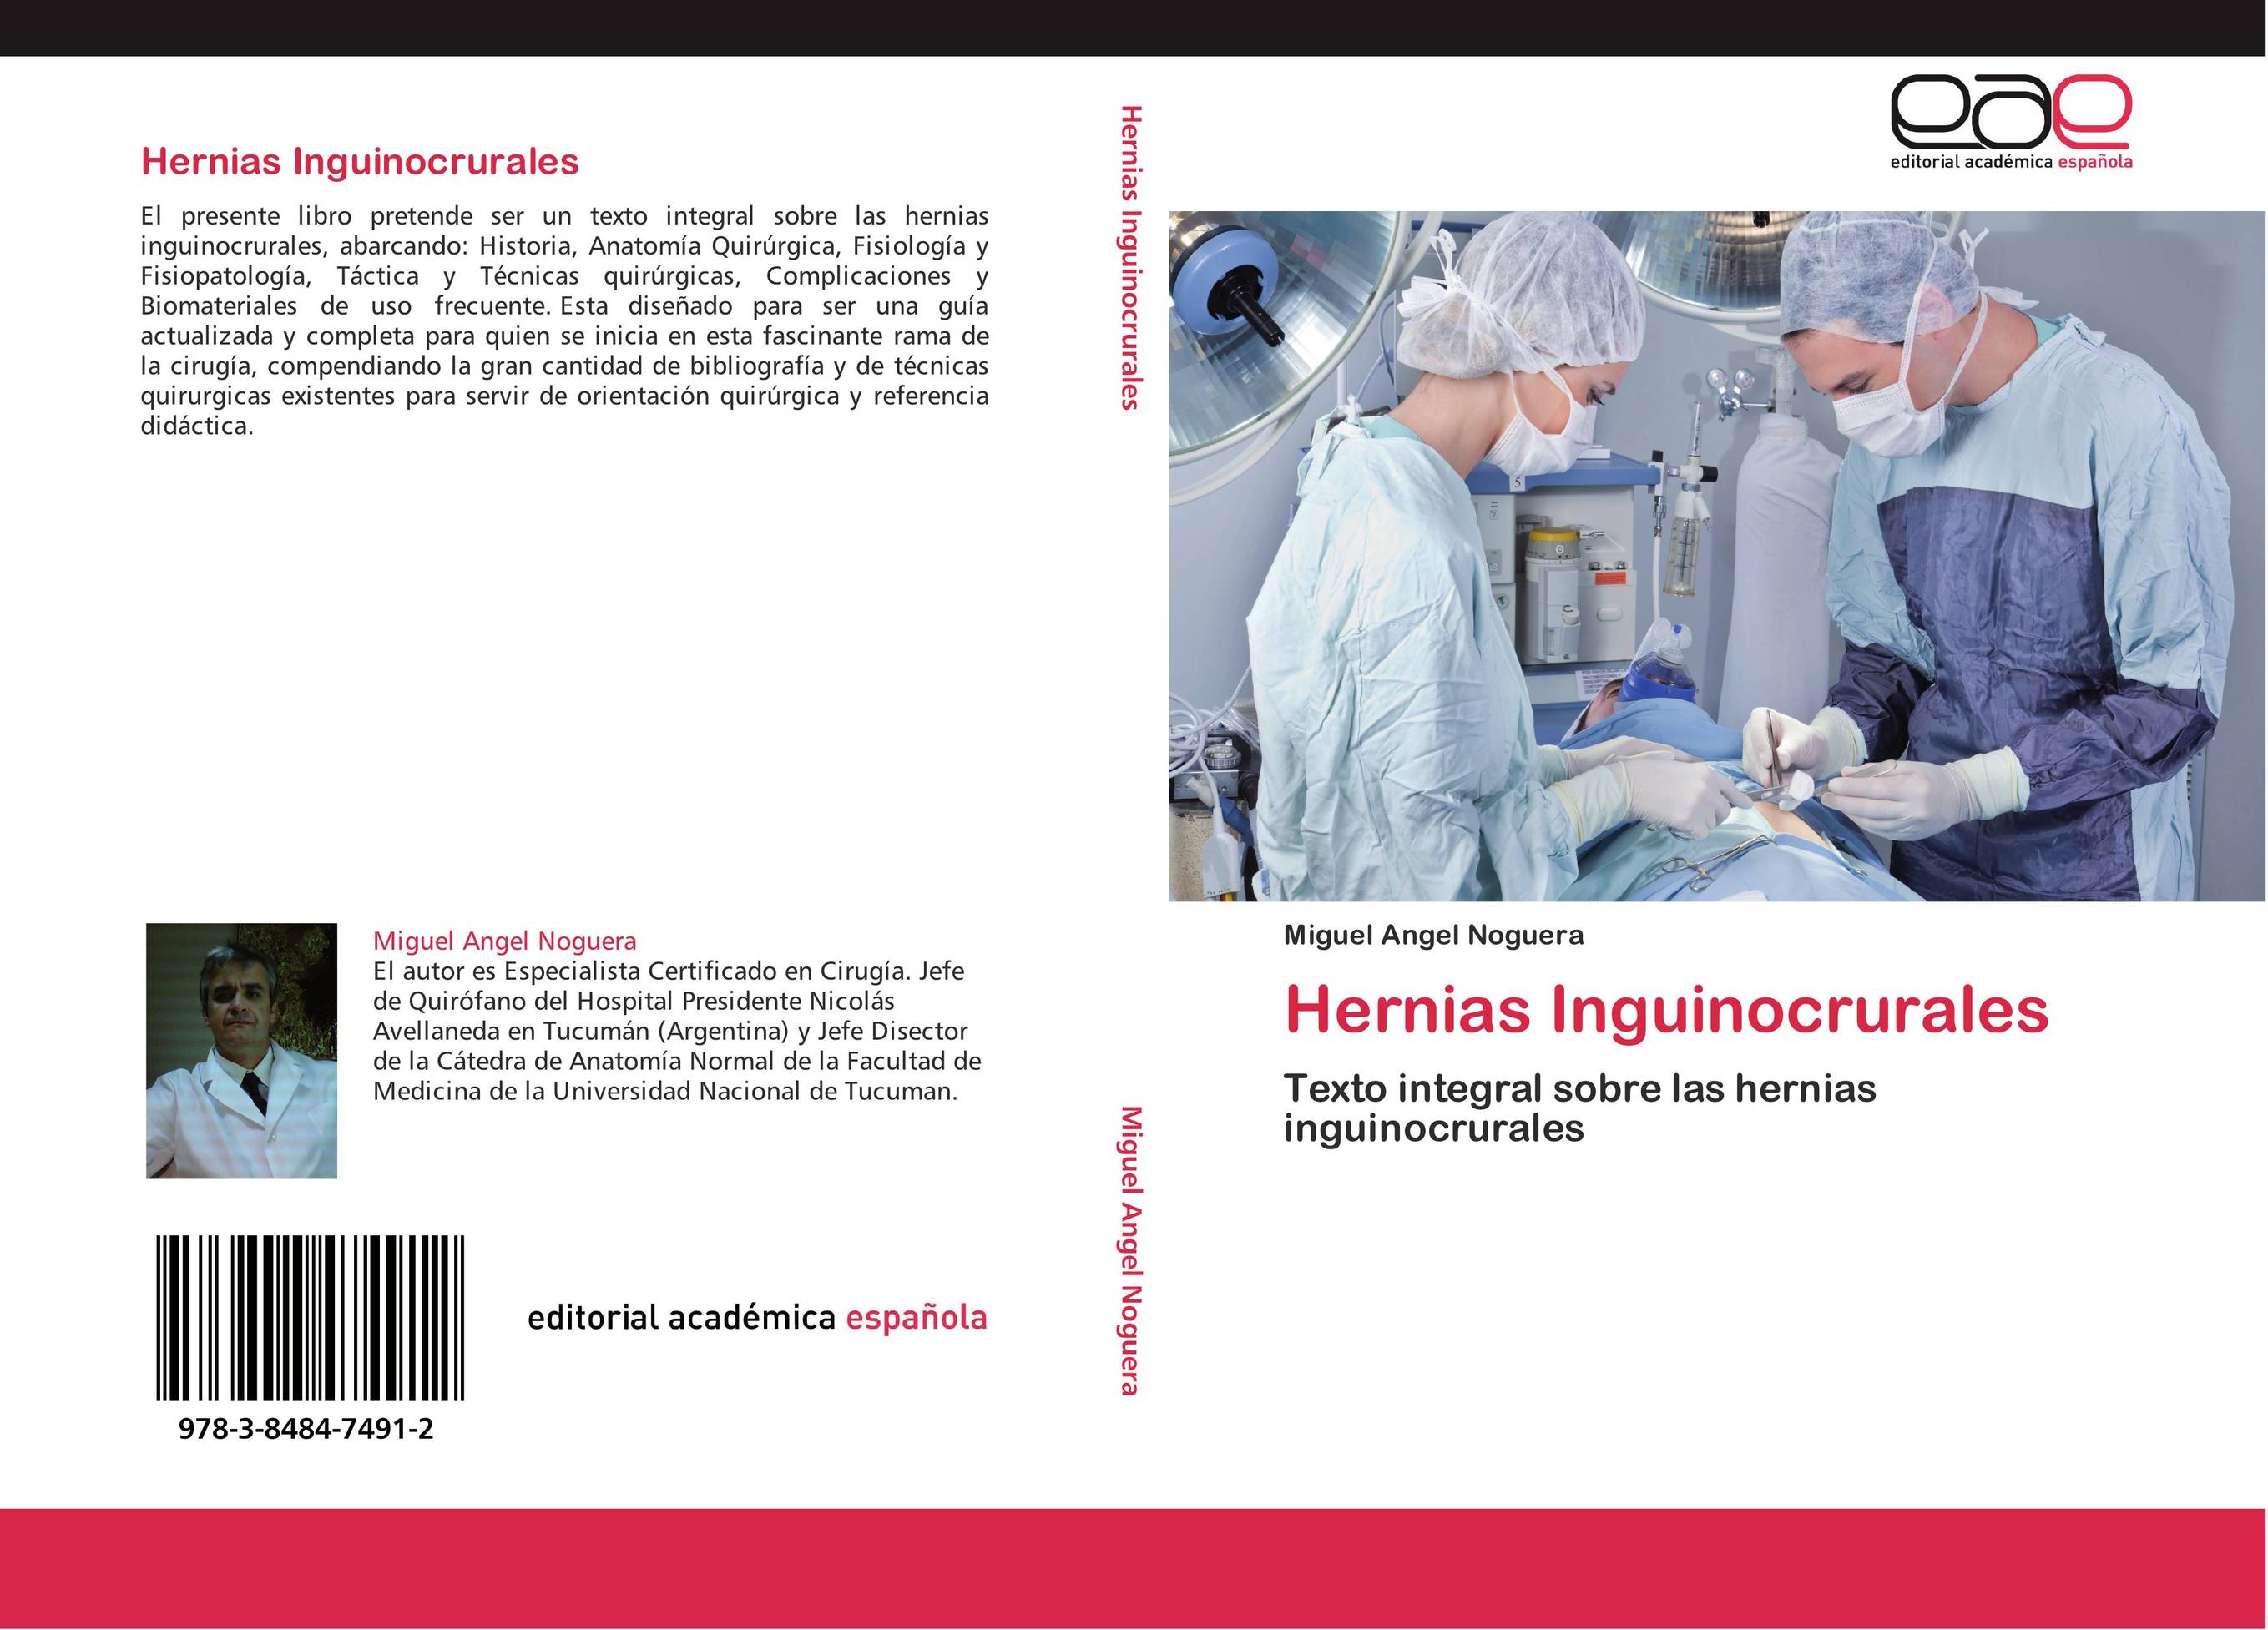 Hernias Inguinocrurales